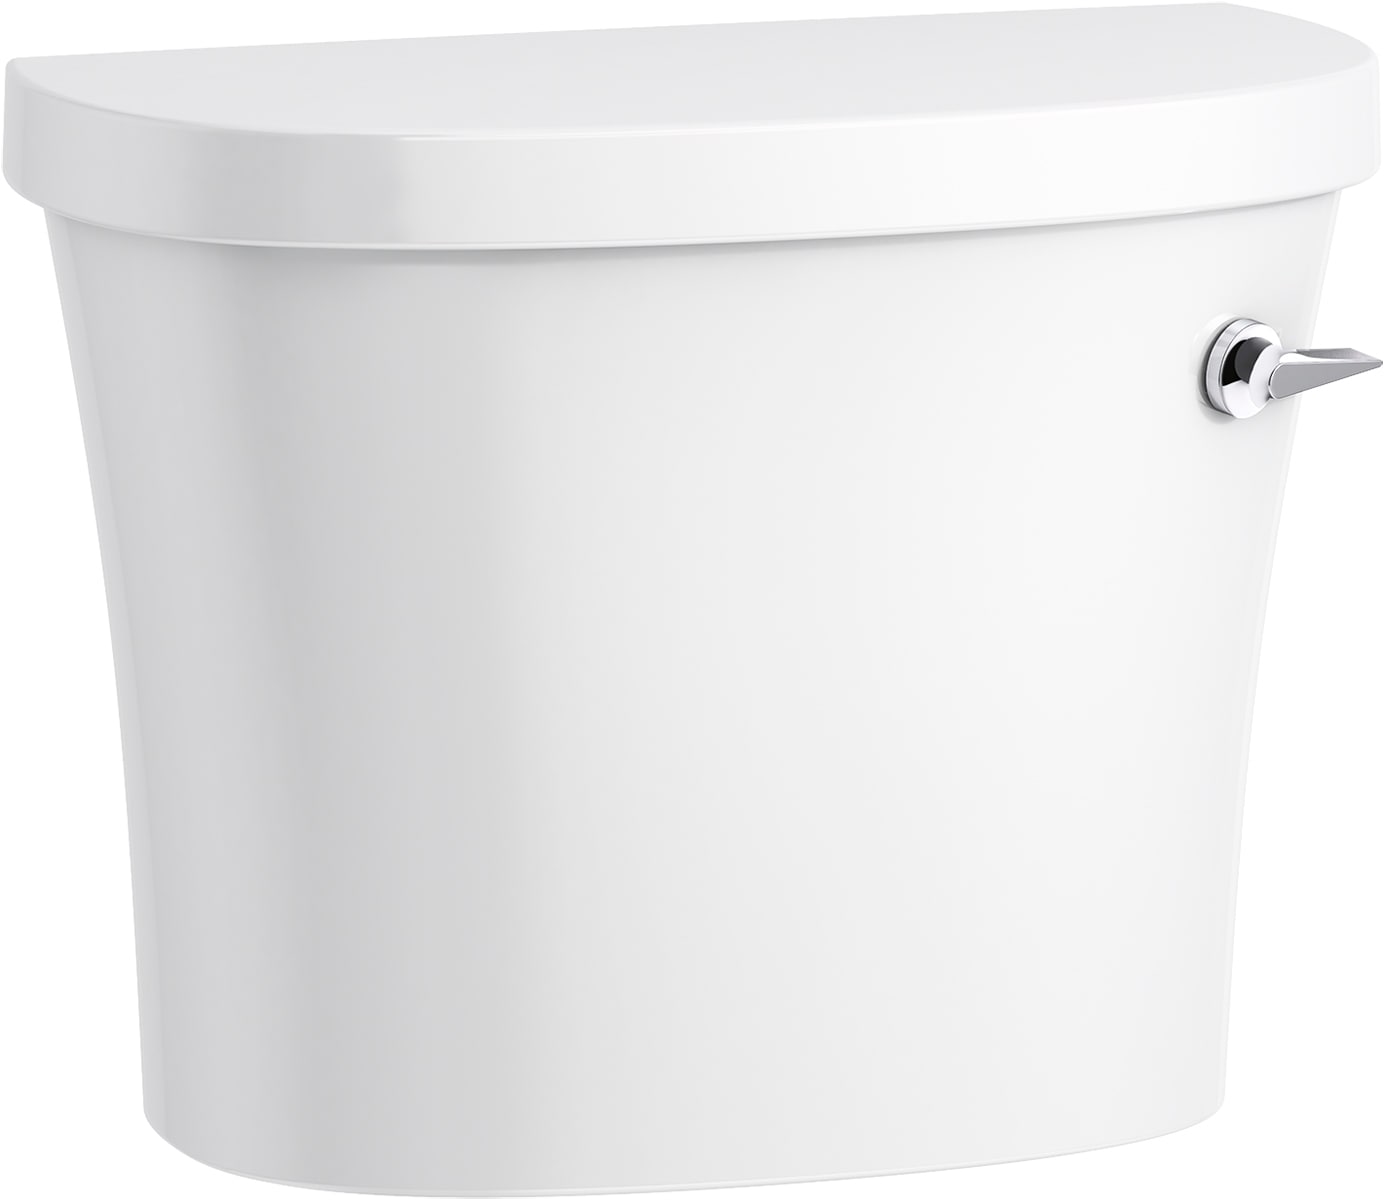 Tafan Opel Singal White Plastic Toilet Flush Tank at best price in